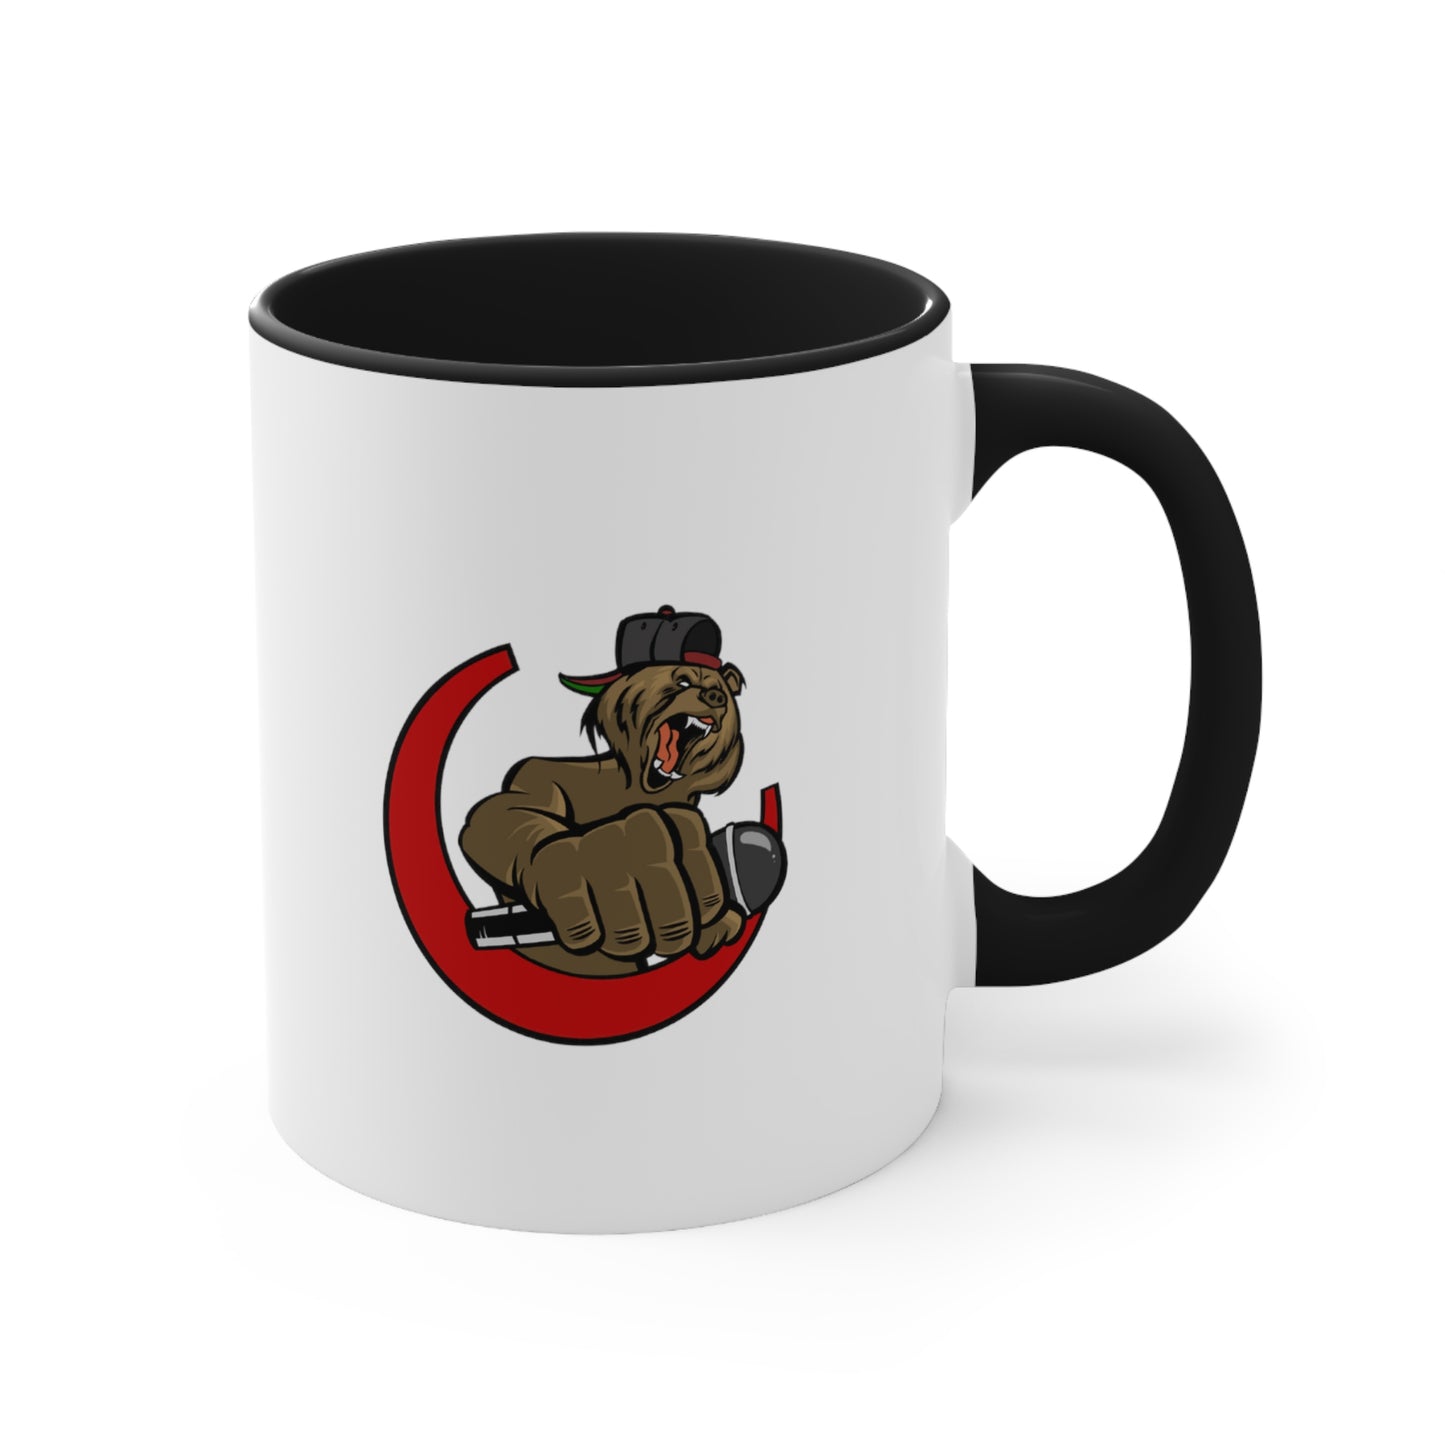 Lac Grizzly - Accent Coffee Mug, 11oz